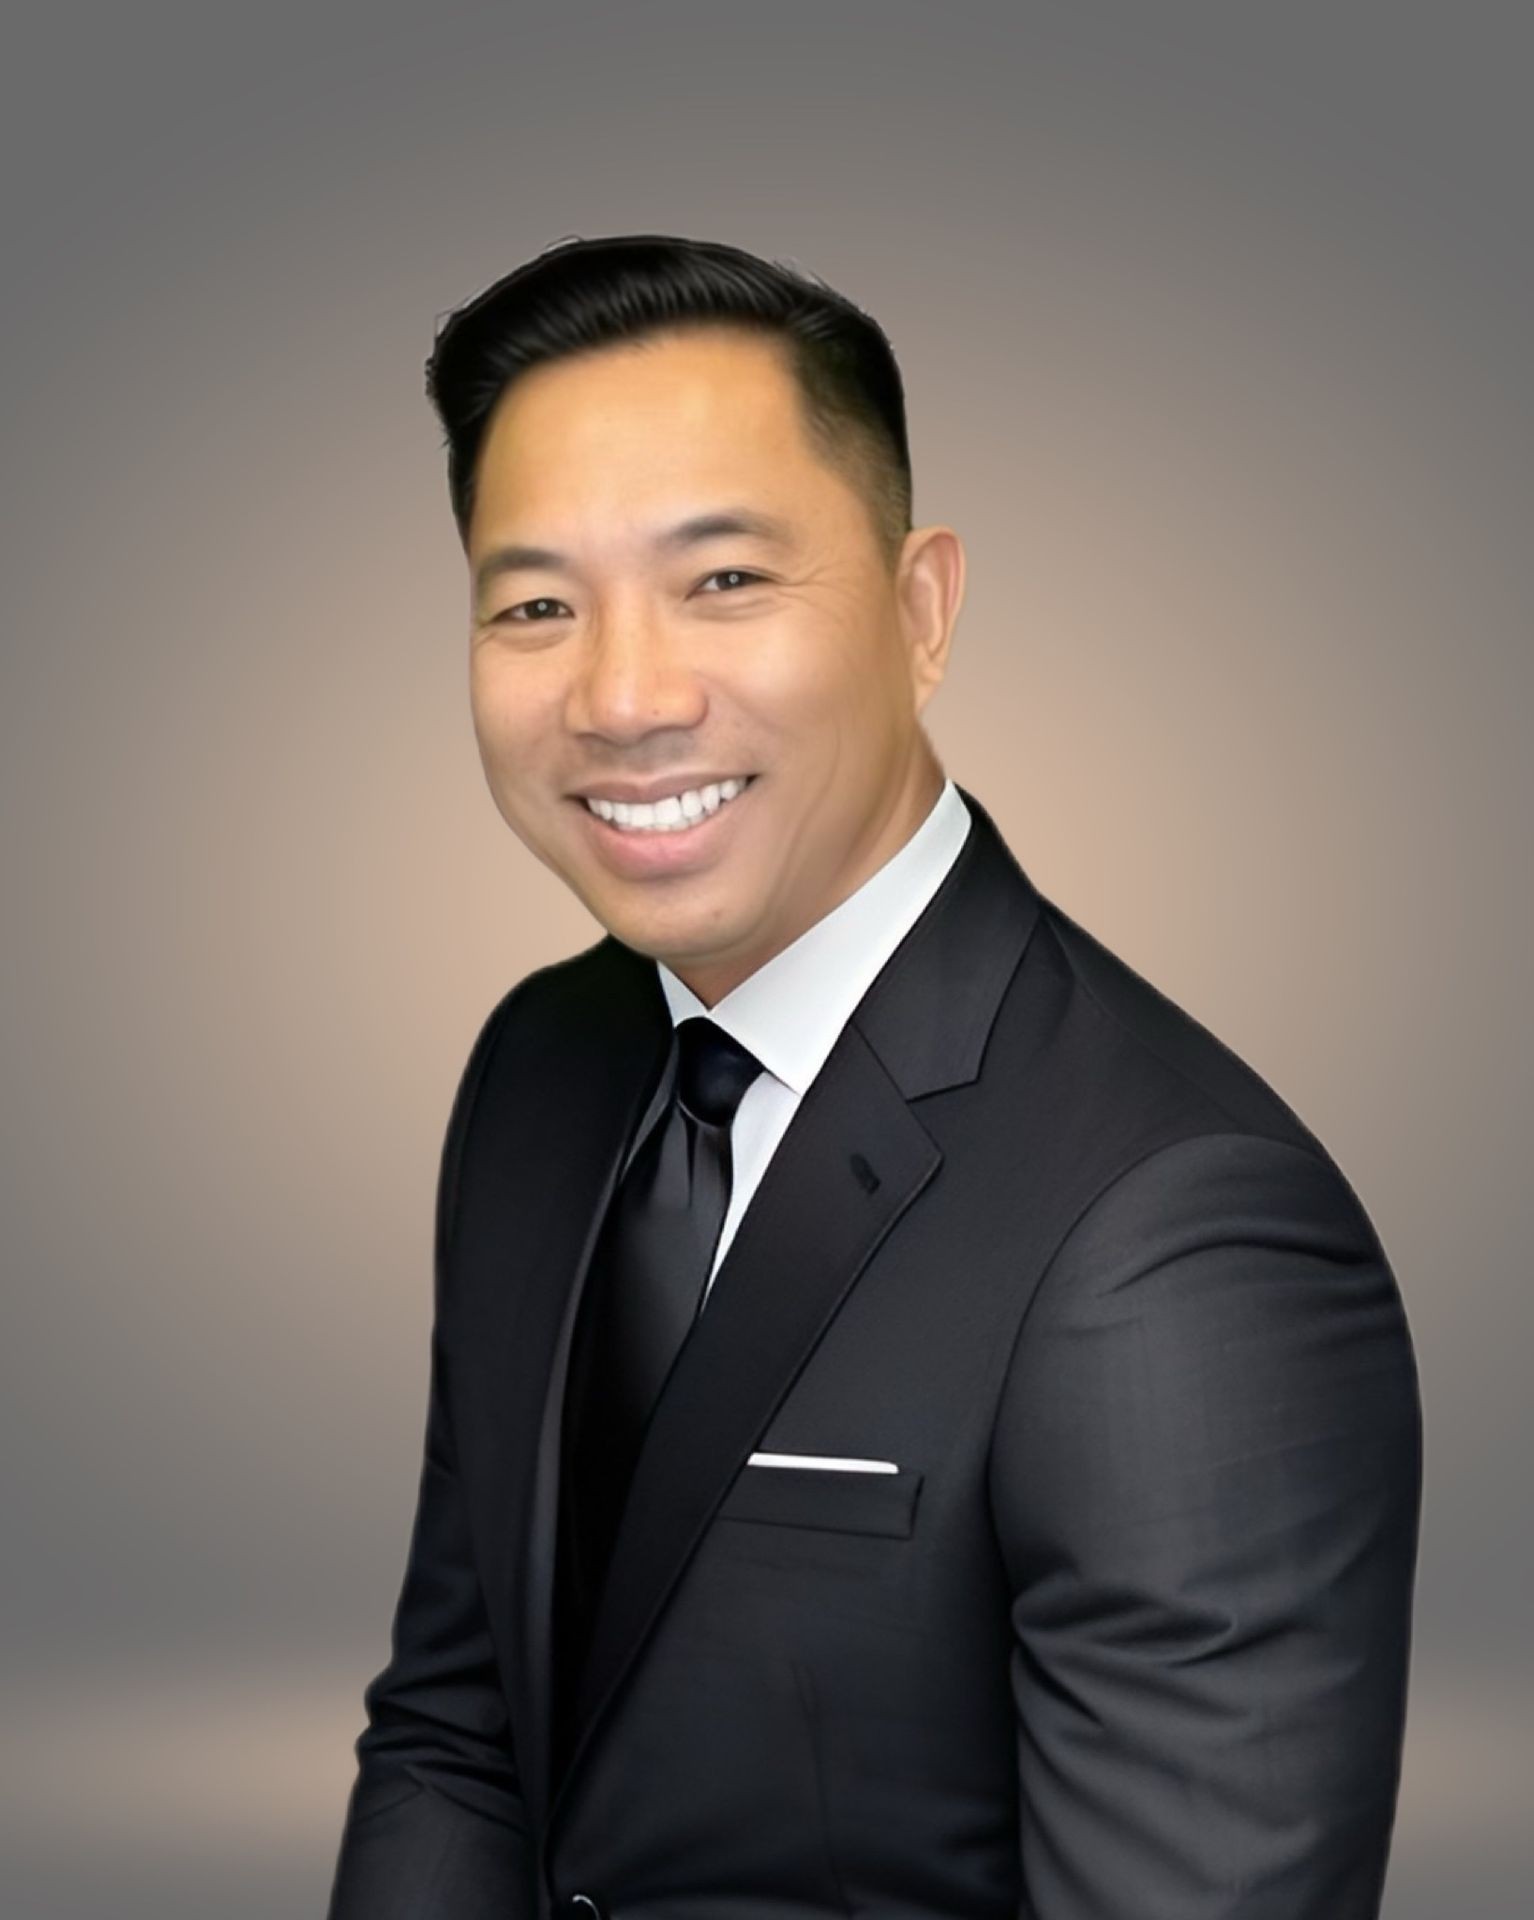 Tony Hoang | Sales Specialist